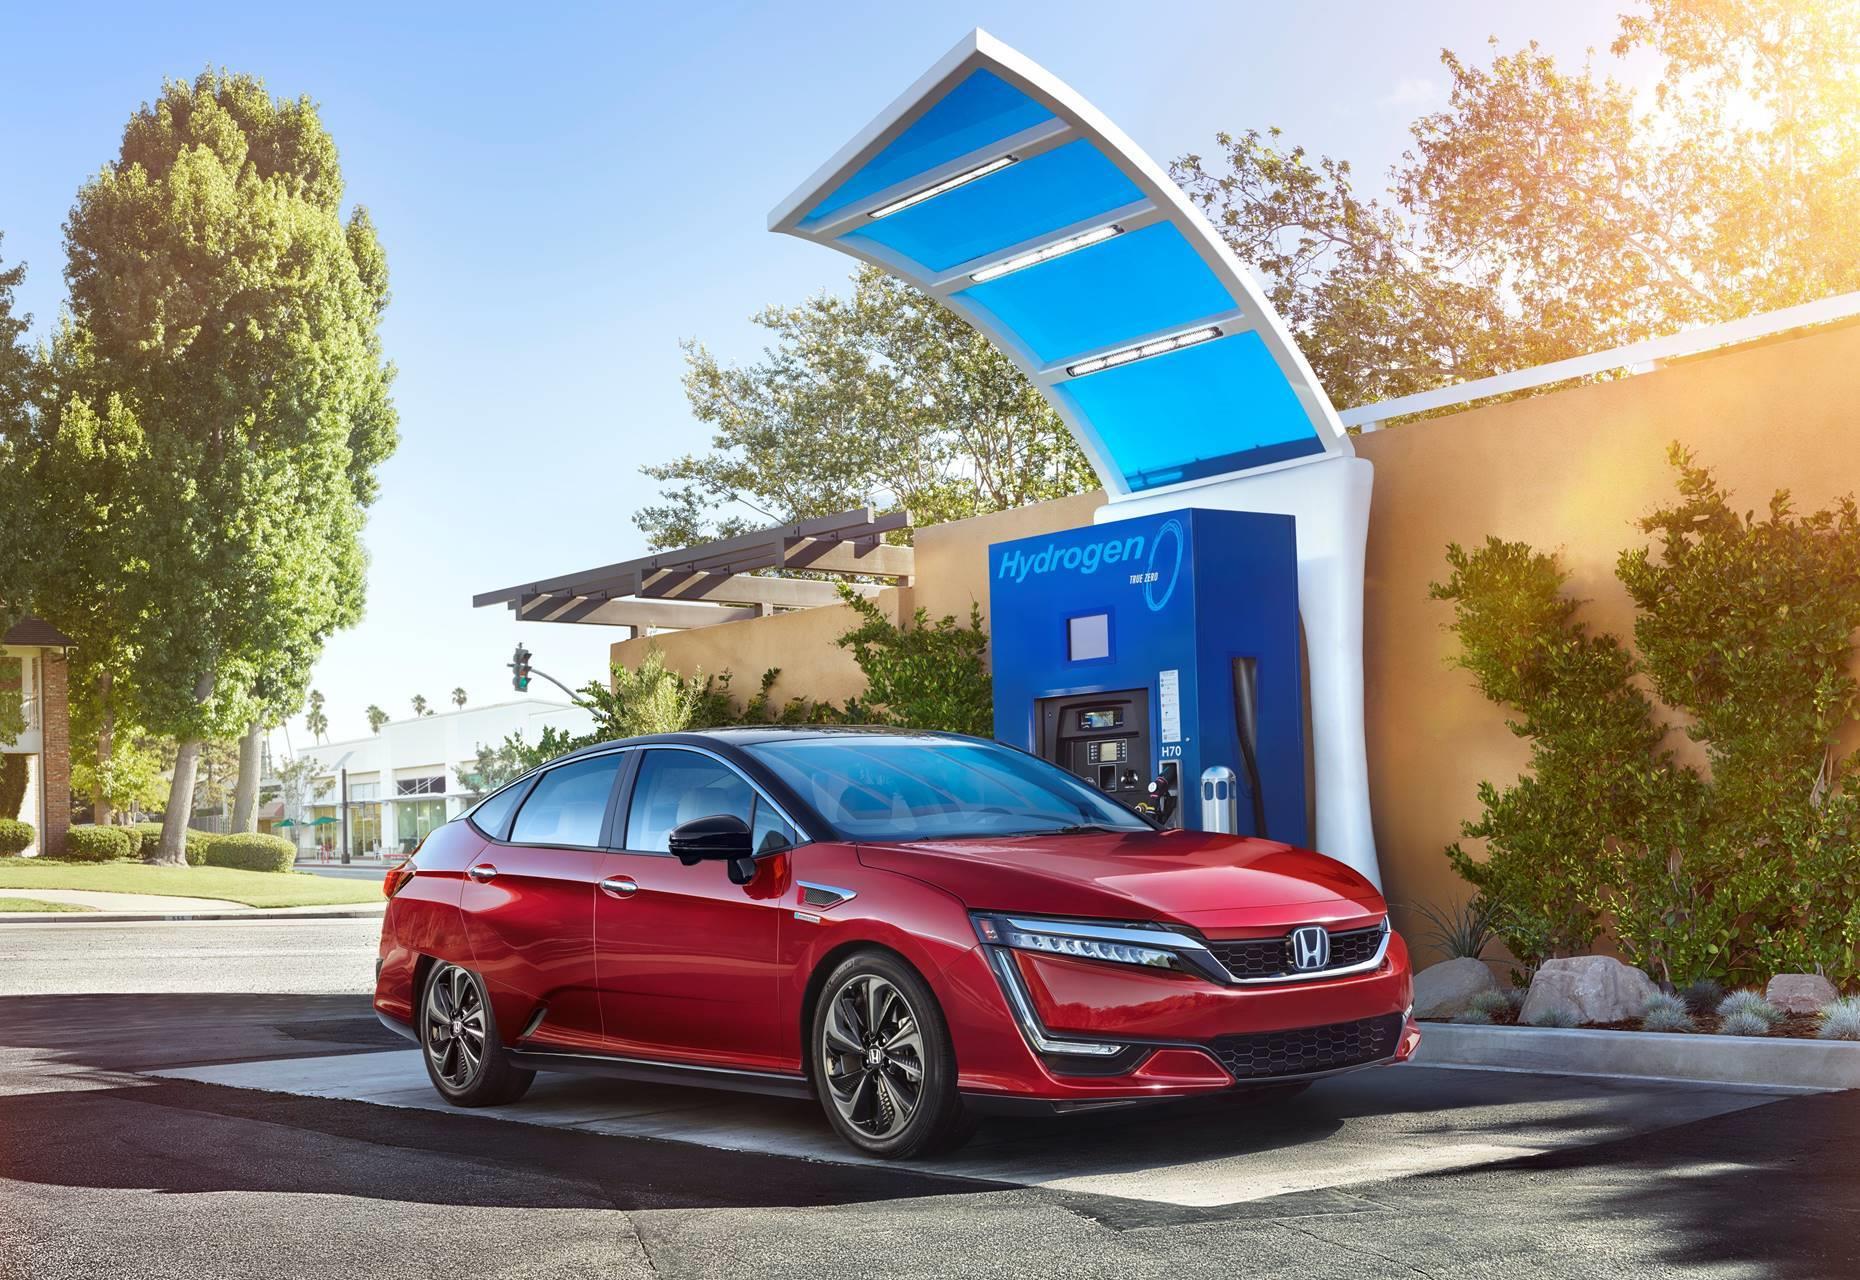 Honda Clarity Fuel Cell News And Information Com